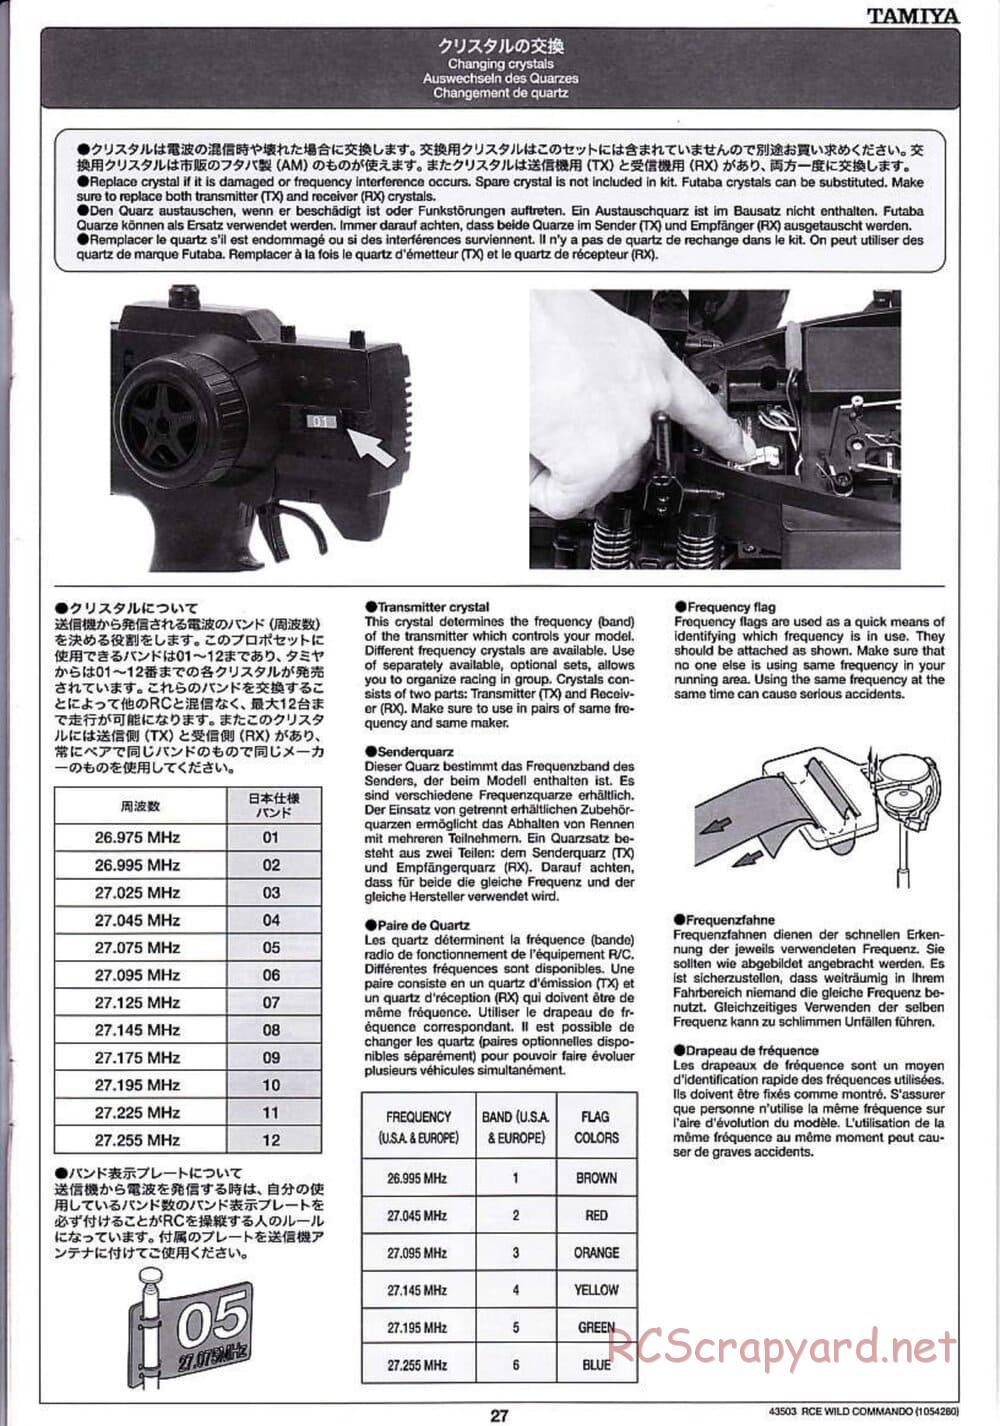 Tamiya - Wild Commando - TGM-02 Chassis - Manual - Page 27